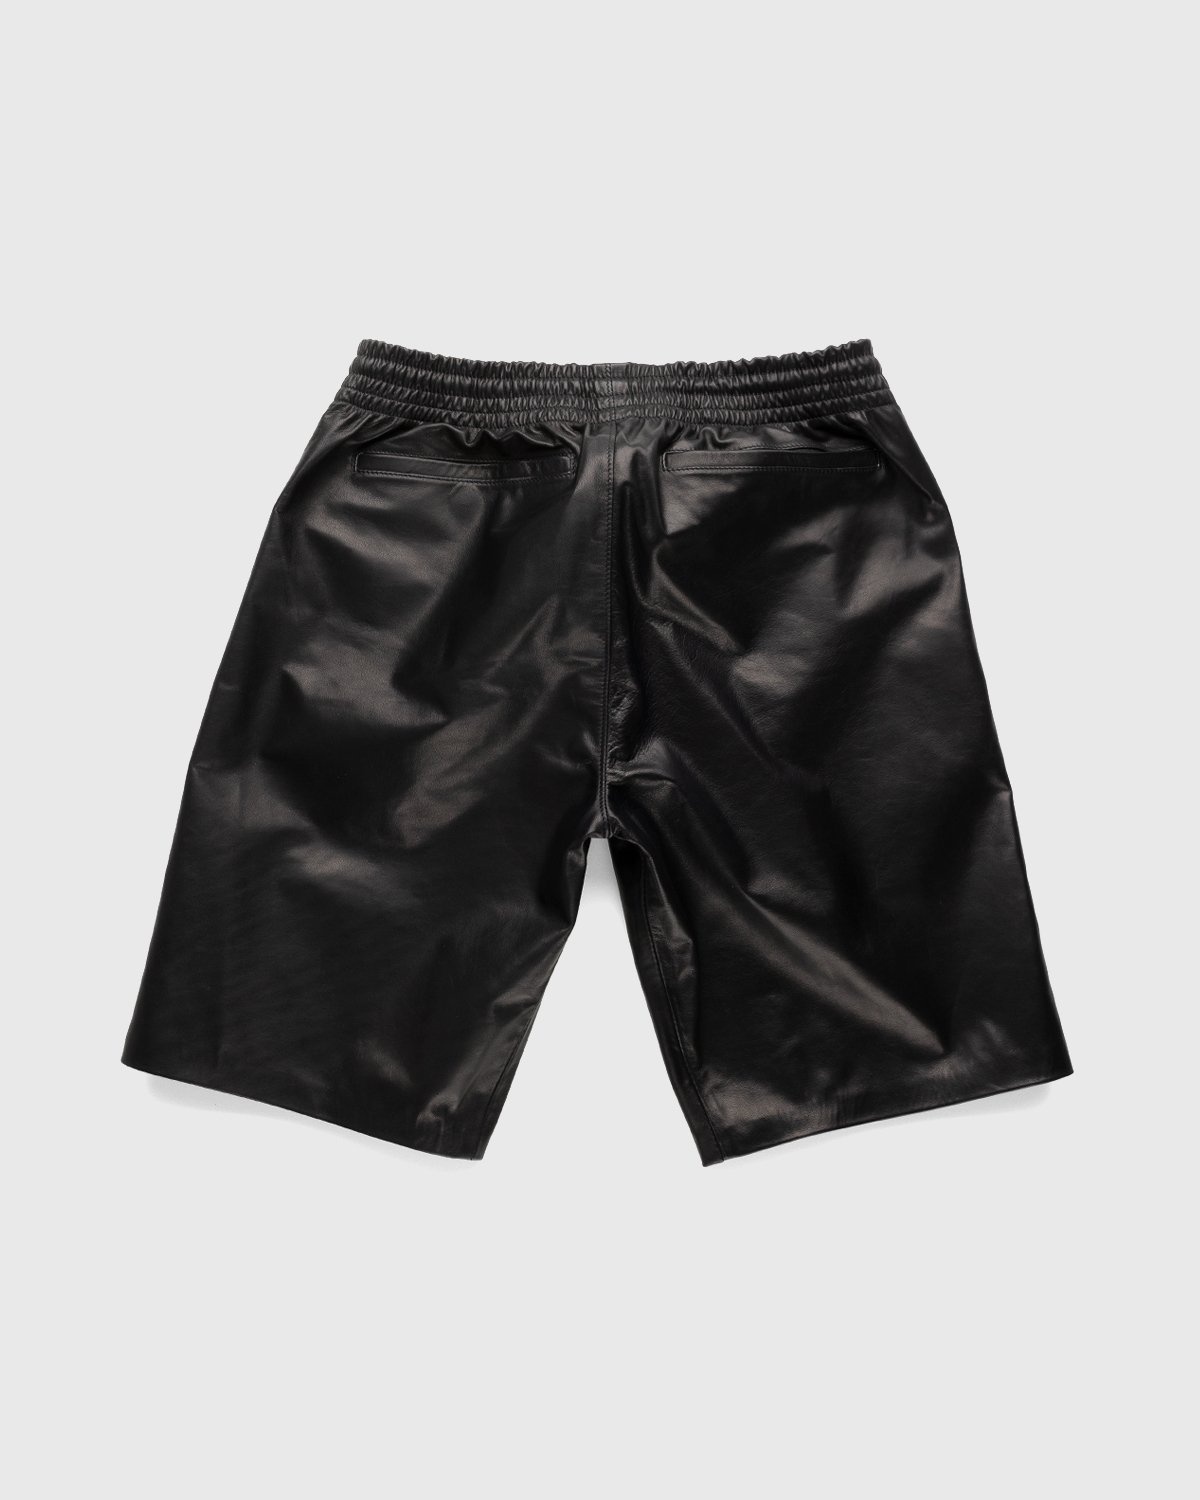 Highsnobiety x Butcherei Lindinger – Shorts Black - Bermuda Cuts - Black - Image 2